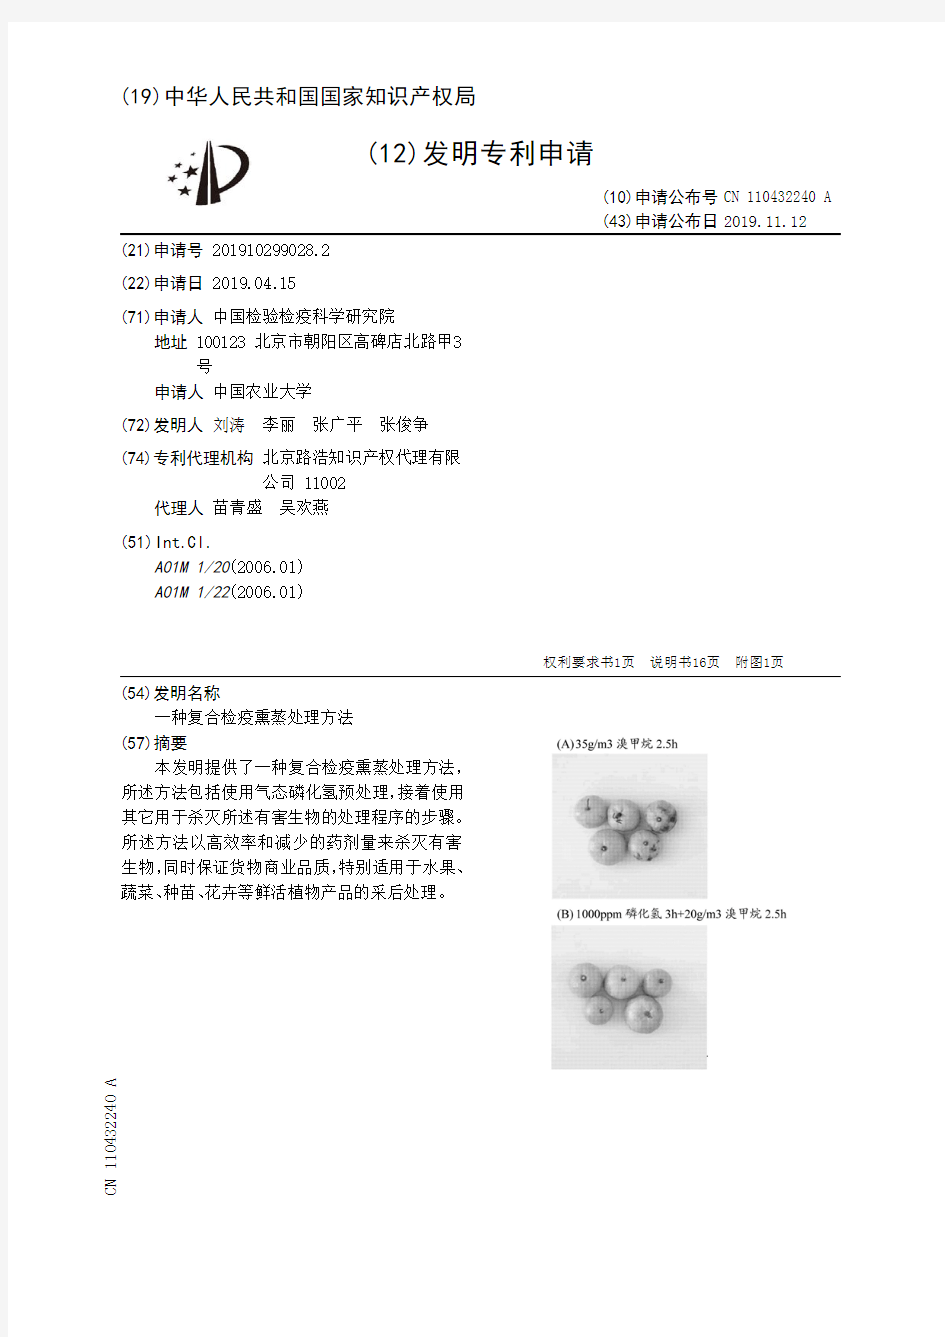 【CN110432240A】一种复合检疫熏蒸处理方法【专利】